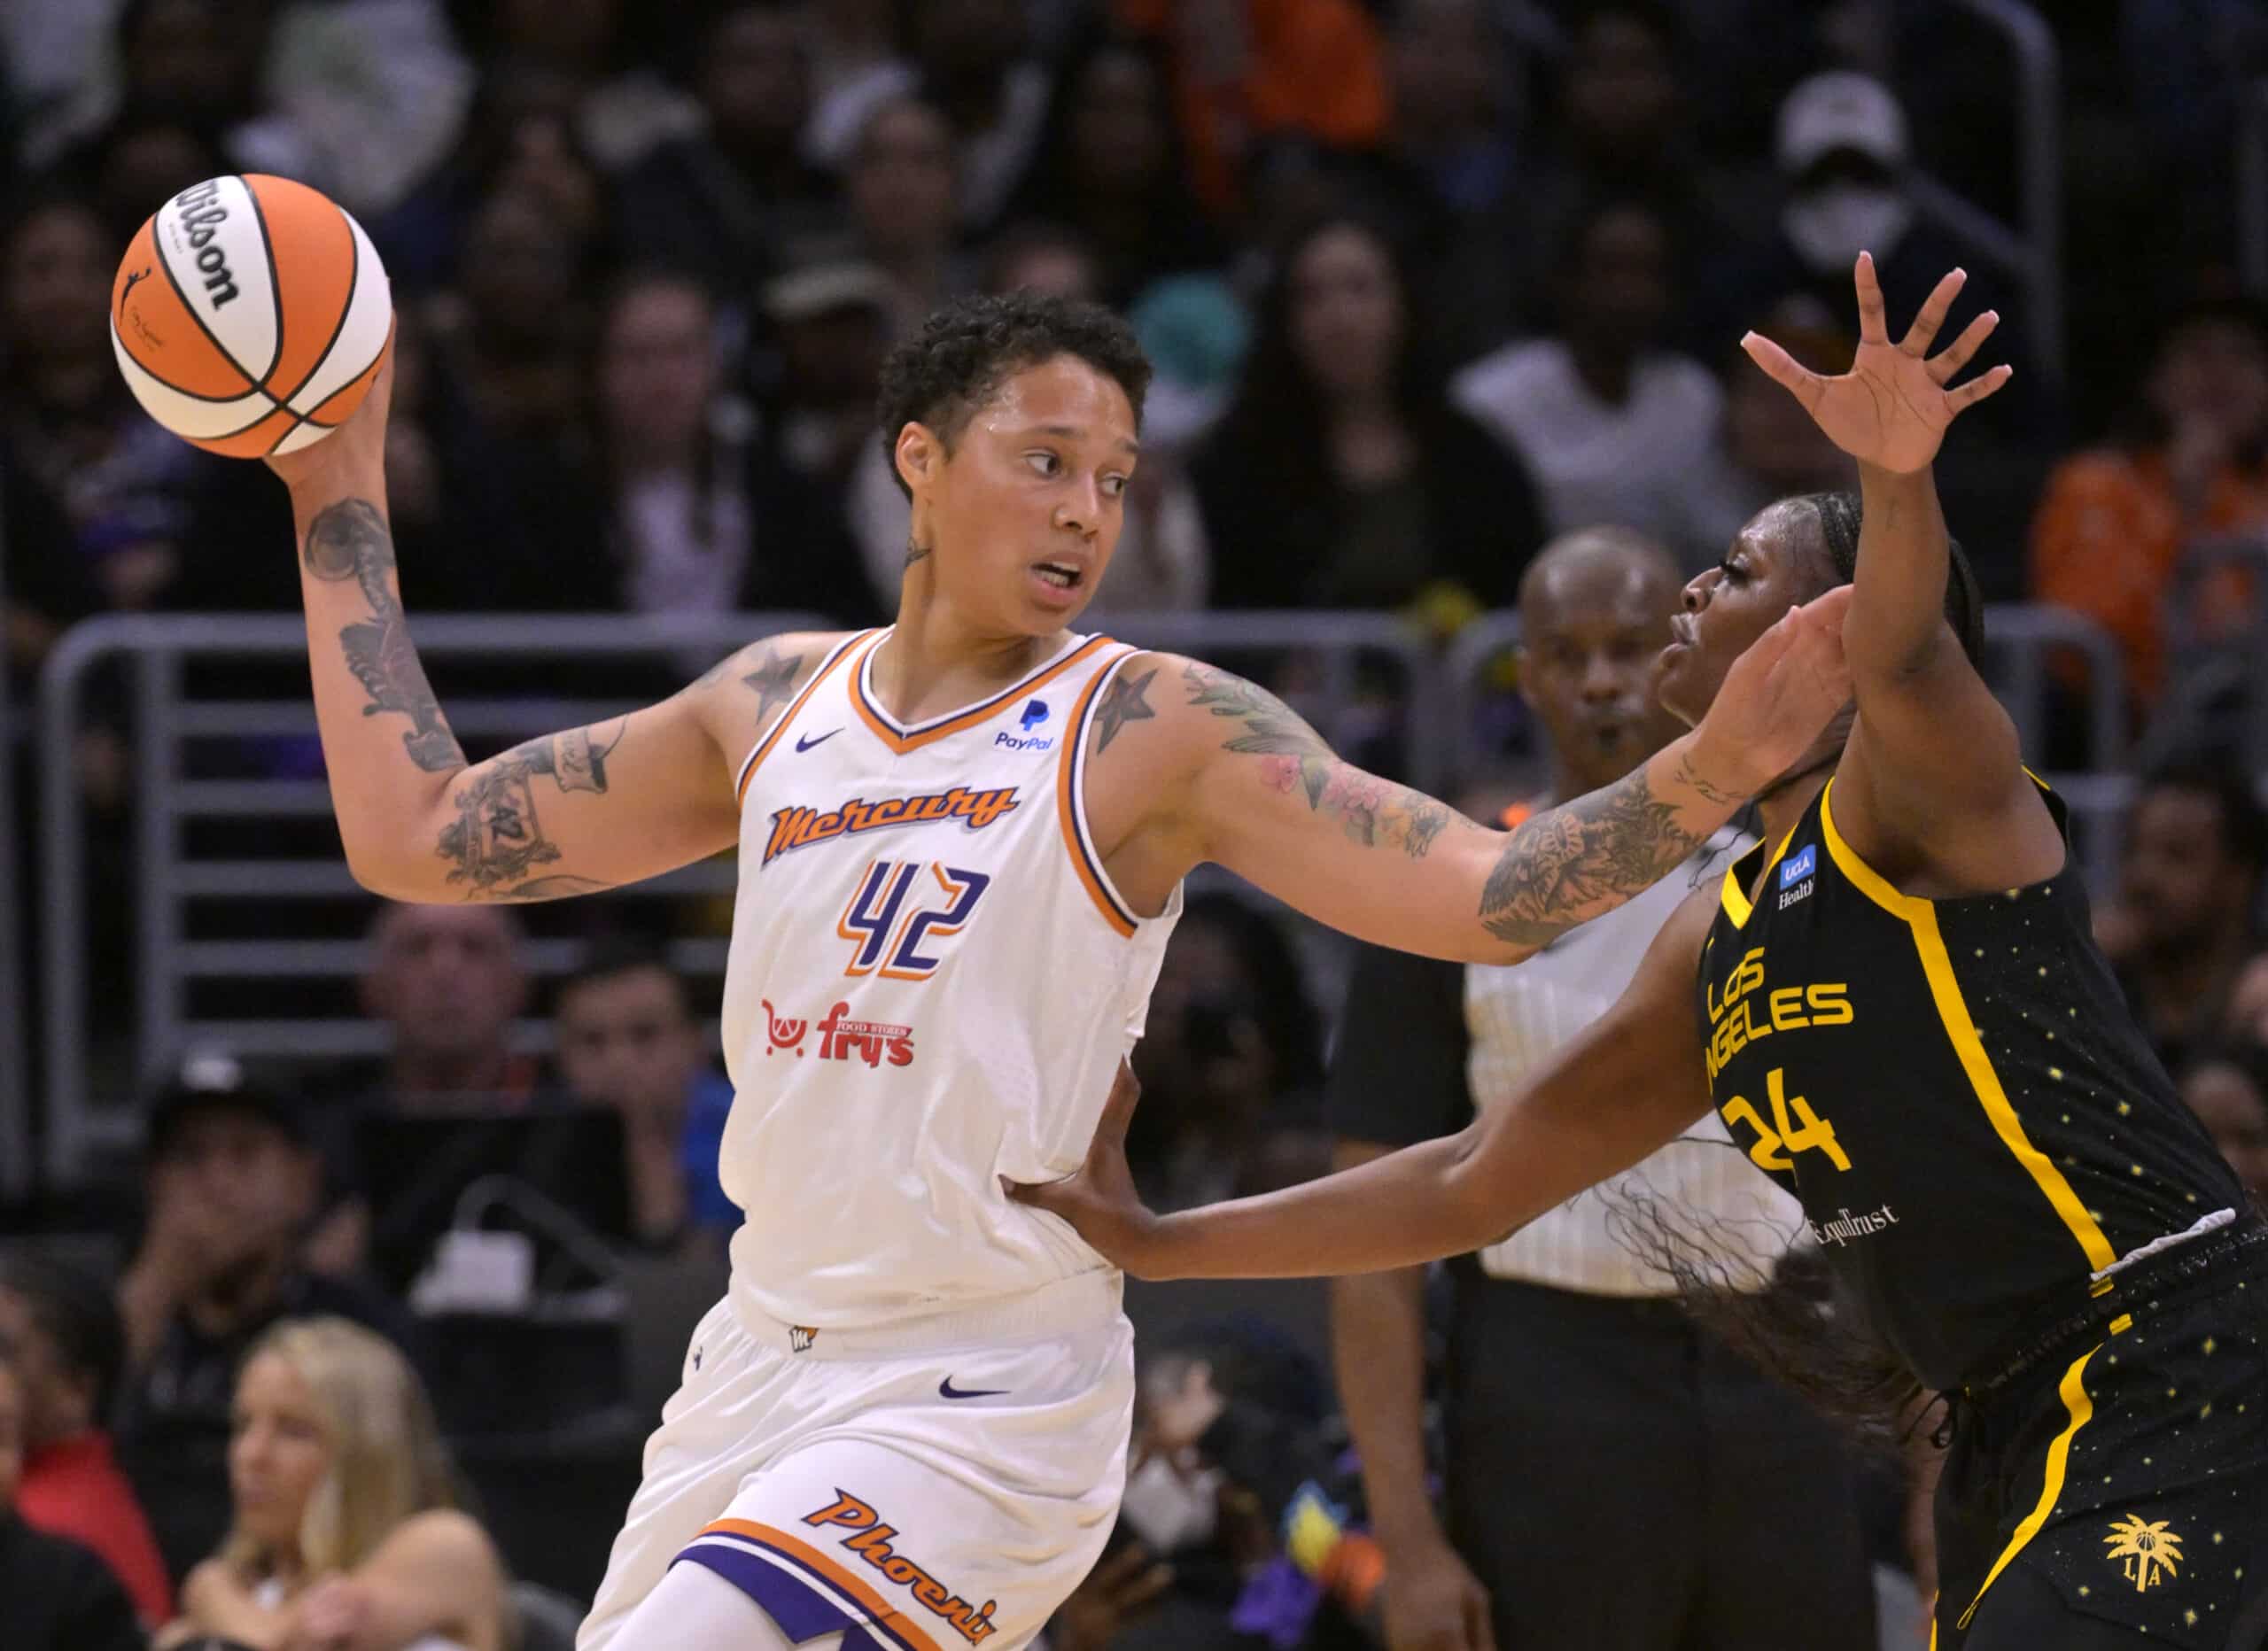 Griner's Return on ESPN Scores Historic WNBA Ratings